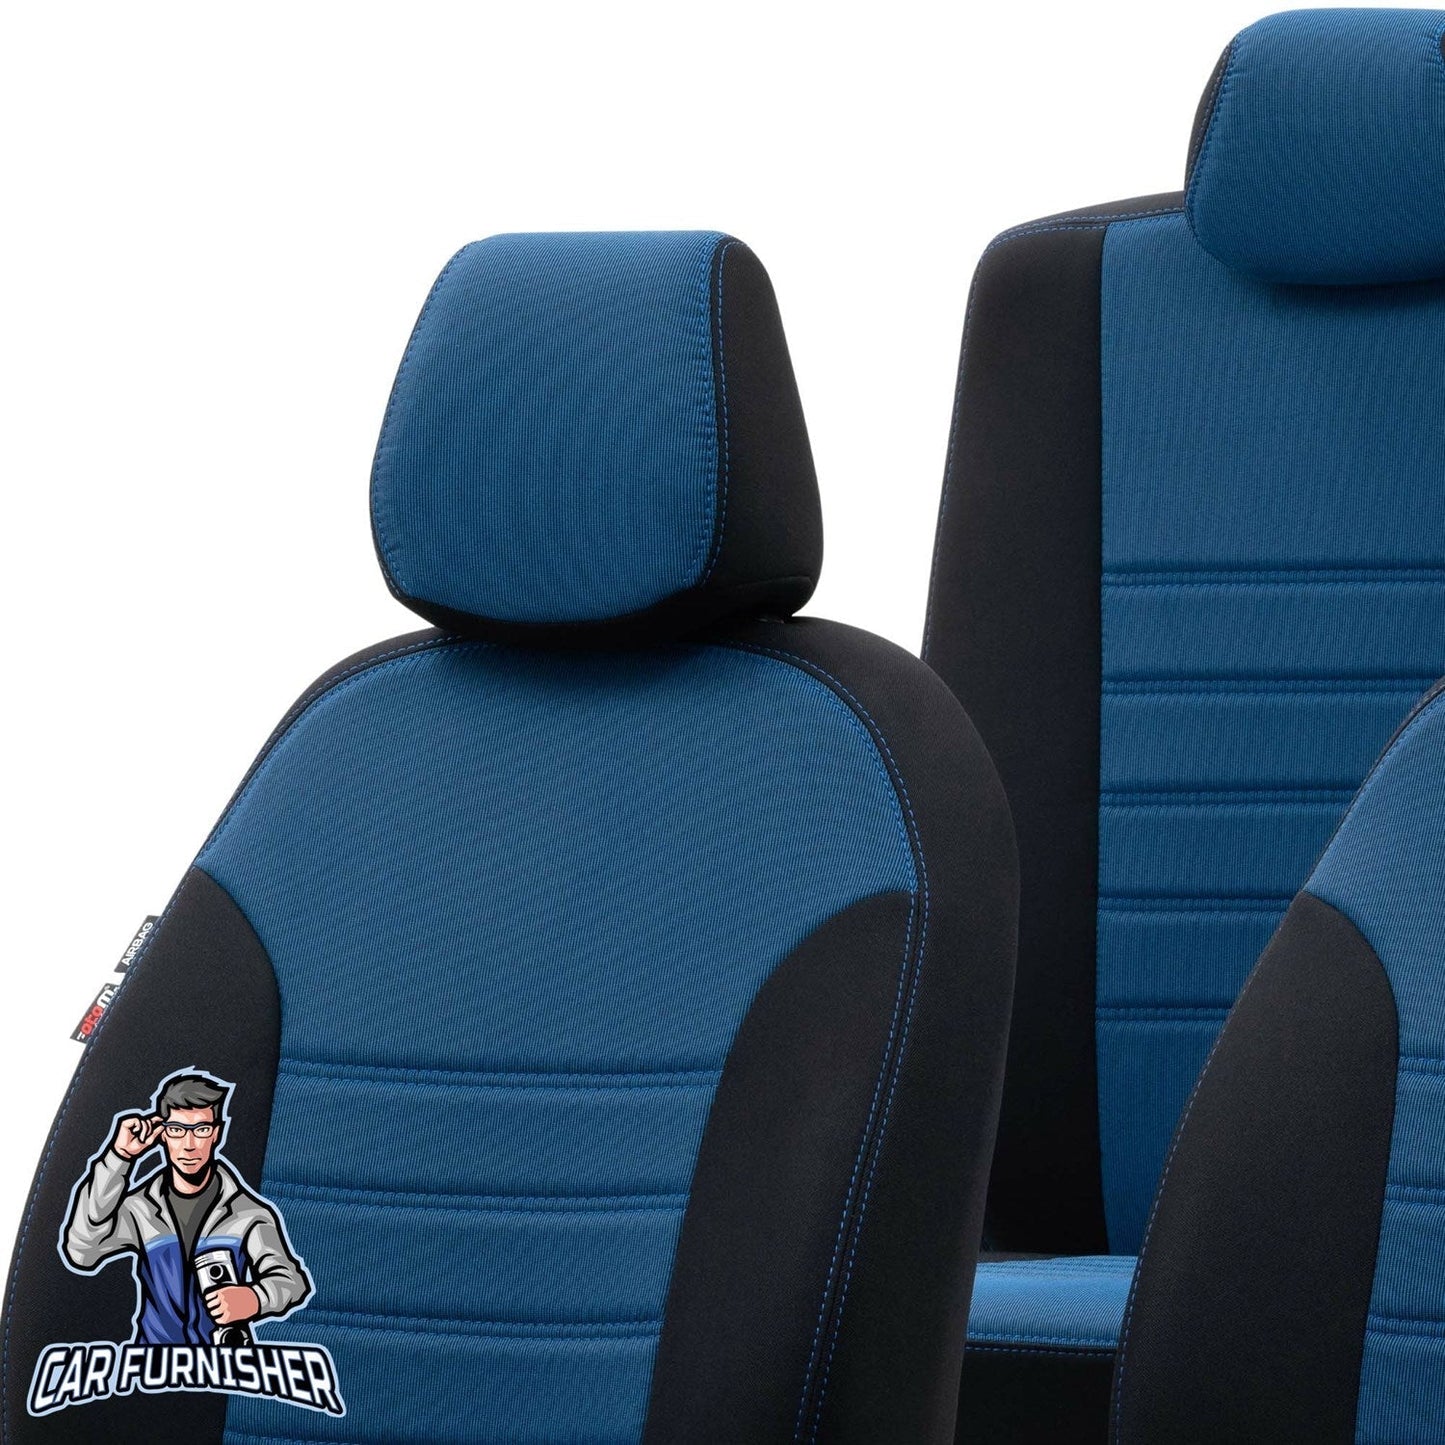 Alfa Romeo Giulietta Seat Cover Original Jacquard Design Blue Jacquard Fabric